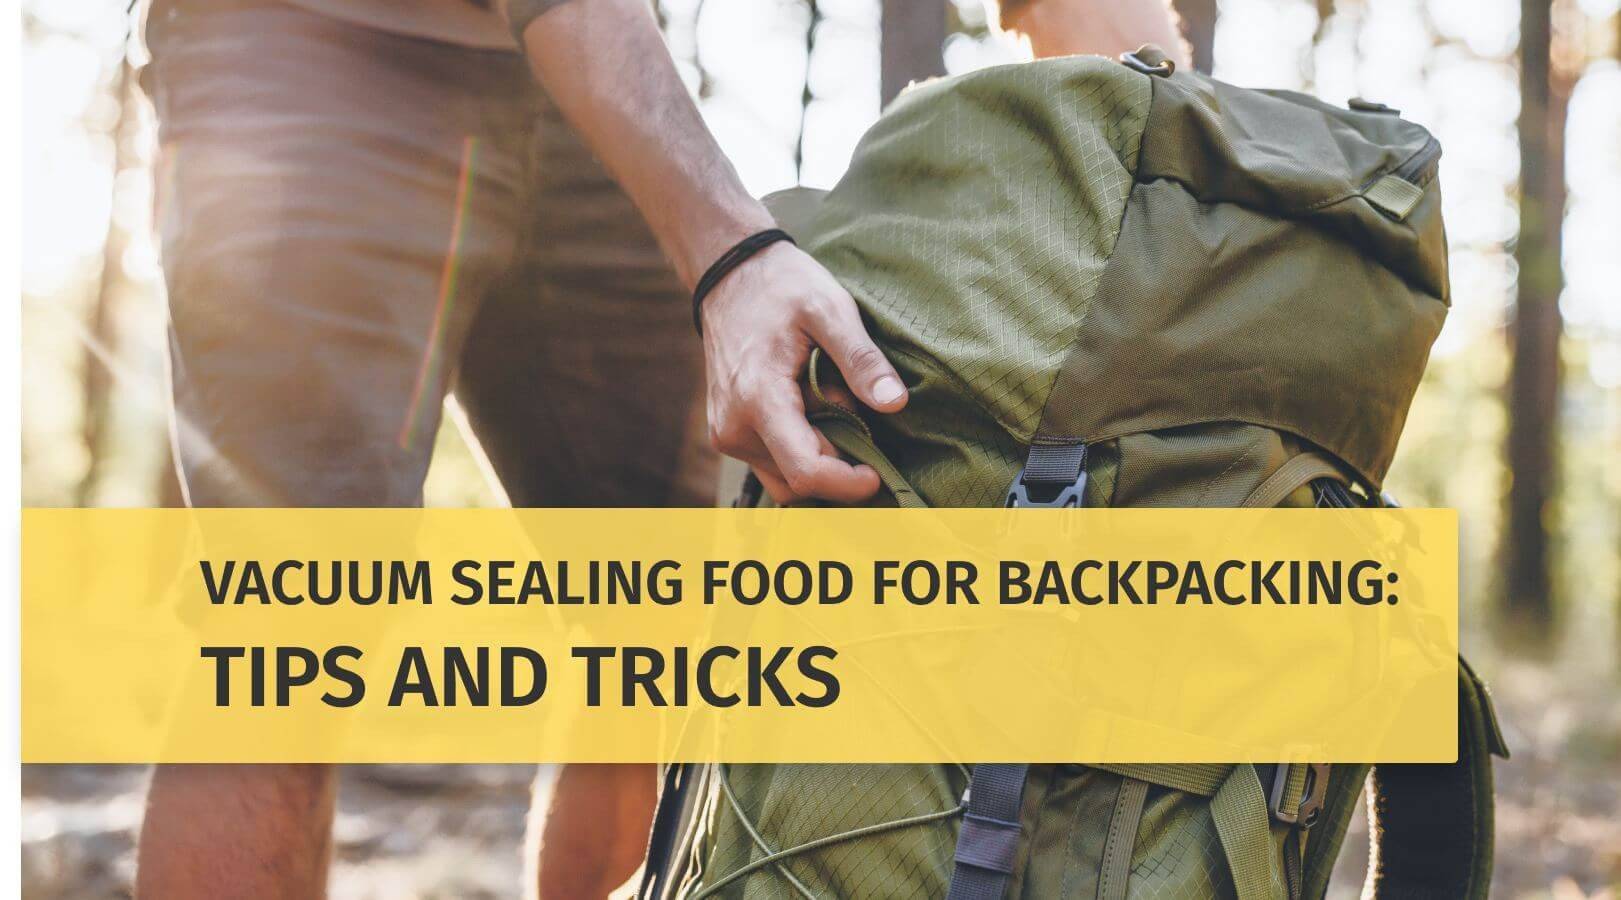 FoodSaver Tips and Tricks: Making DIY Small Bags 